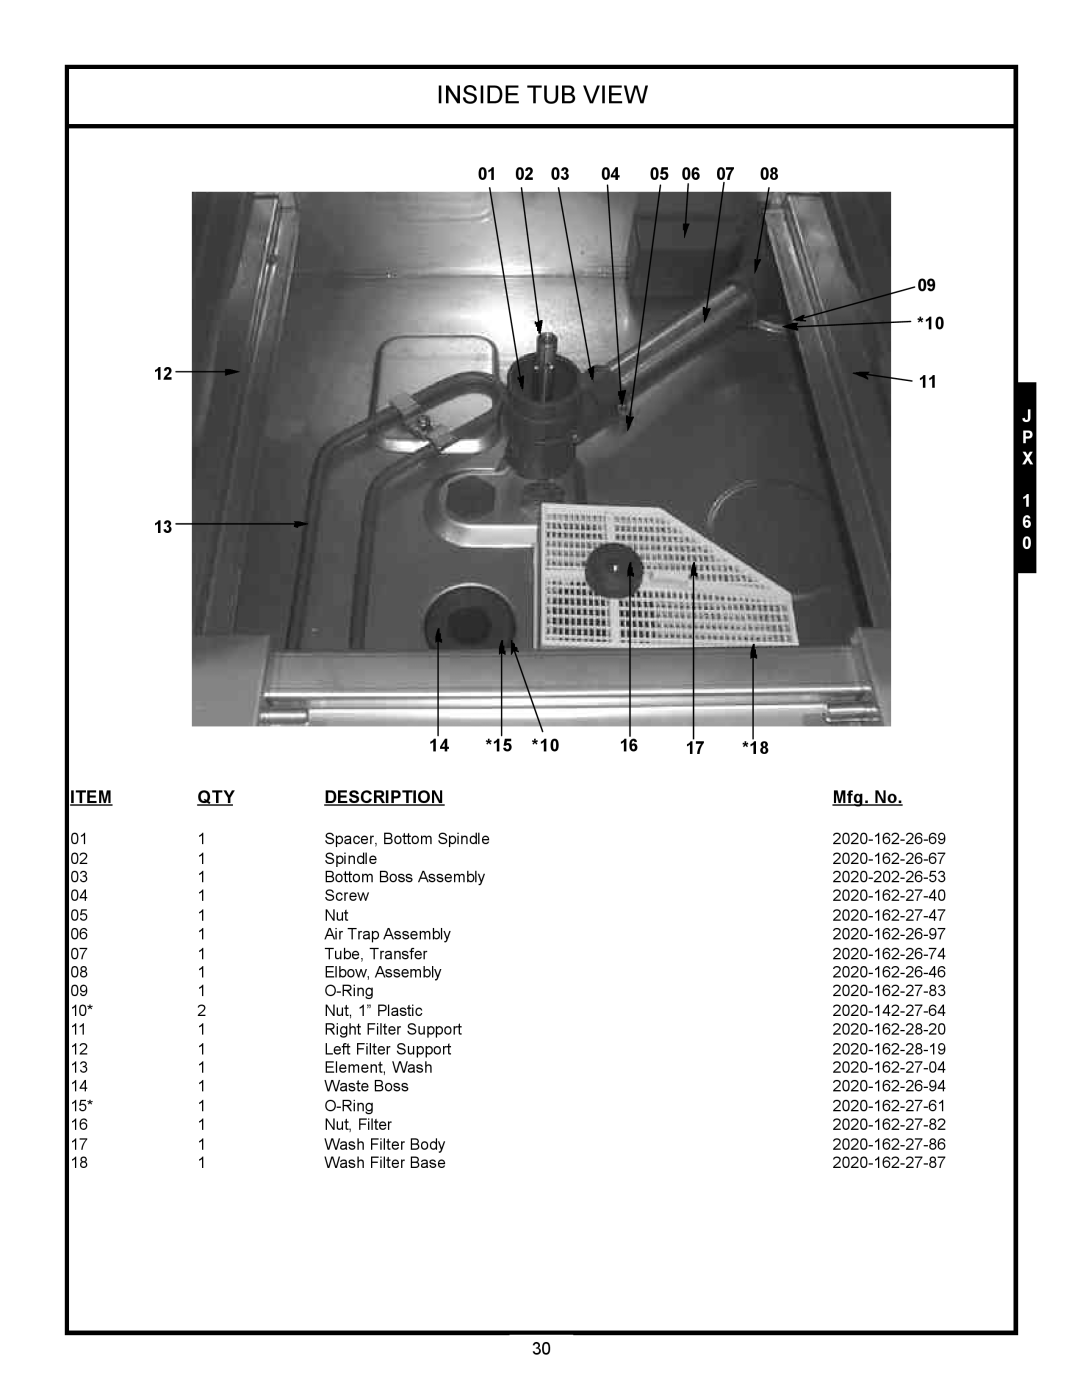 Jackson JPX-200, JPX-160, jpx-140 service manual 01 02 03 04, Inside Tub View, J P, Description, Mfg. No 